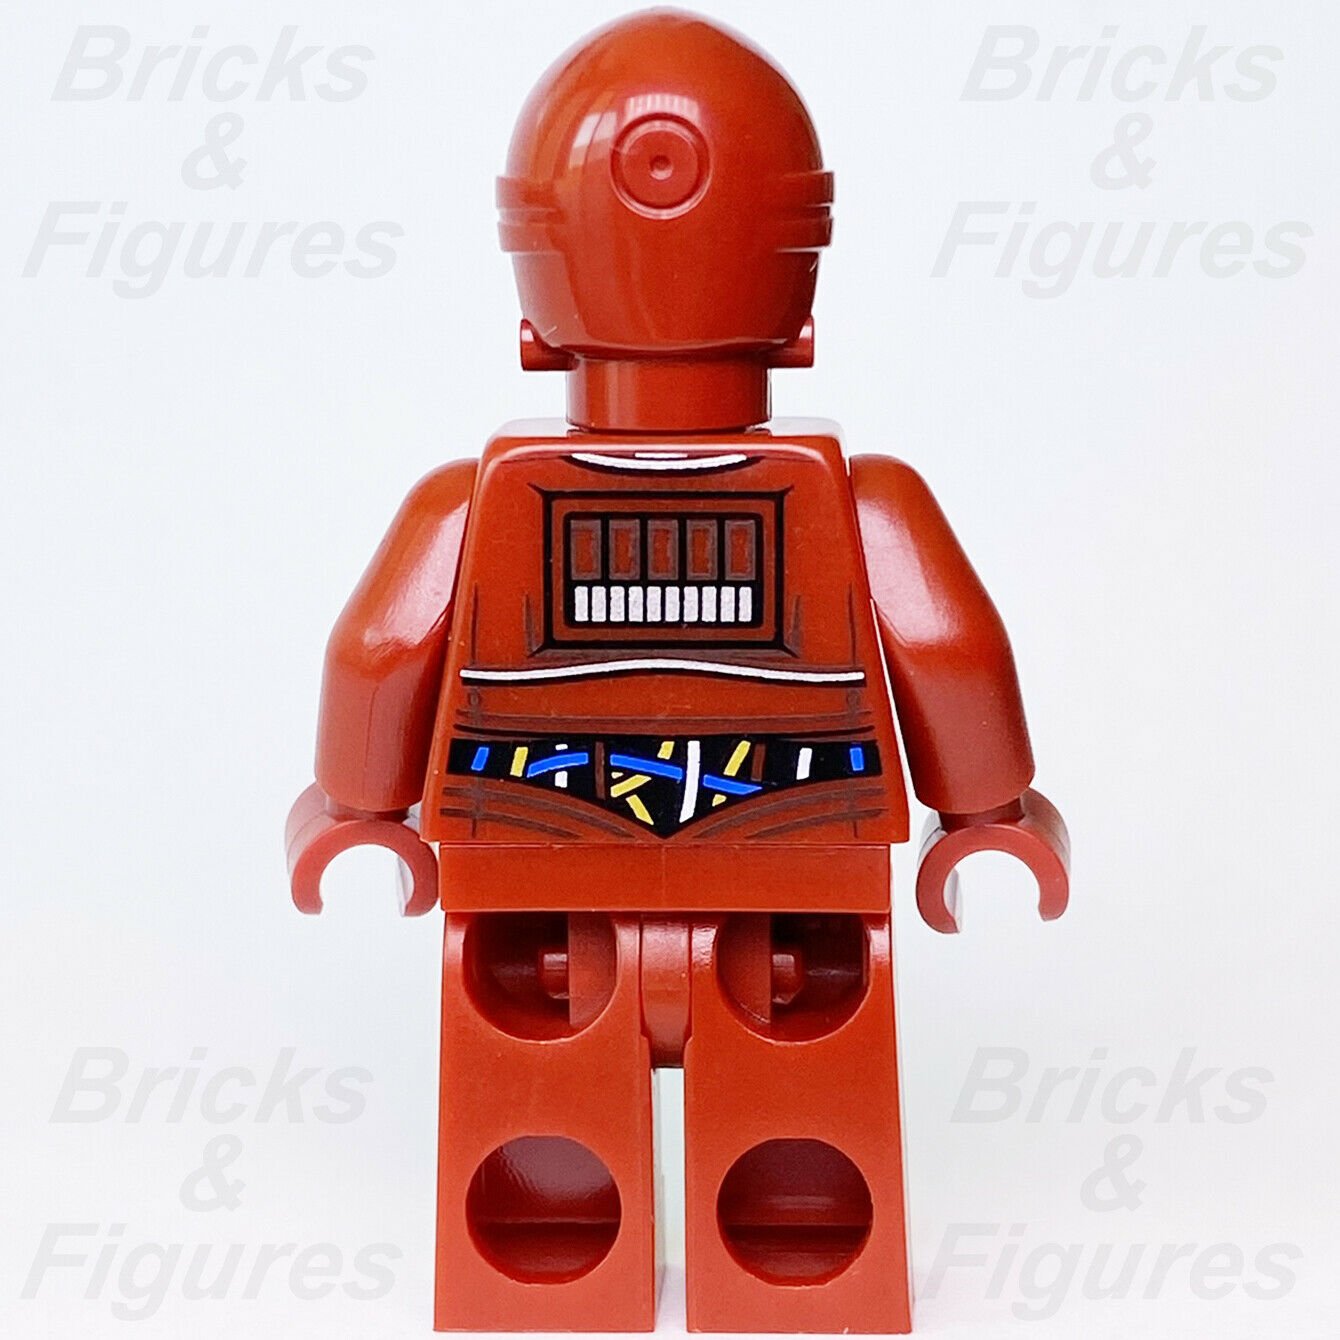 Star Wars LEGO TC-4 Protocol Droid Red The Phantom Menace Minifigure 5002122 - Bricks & Figures